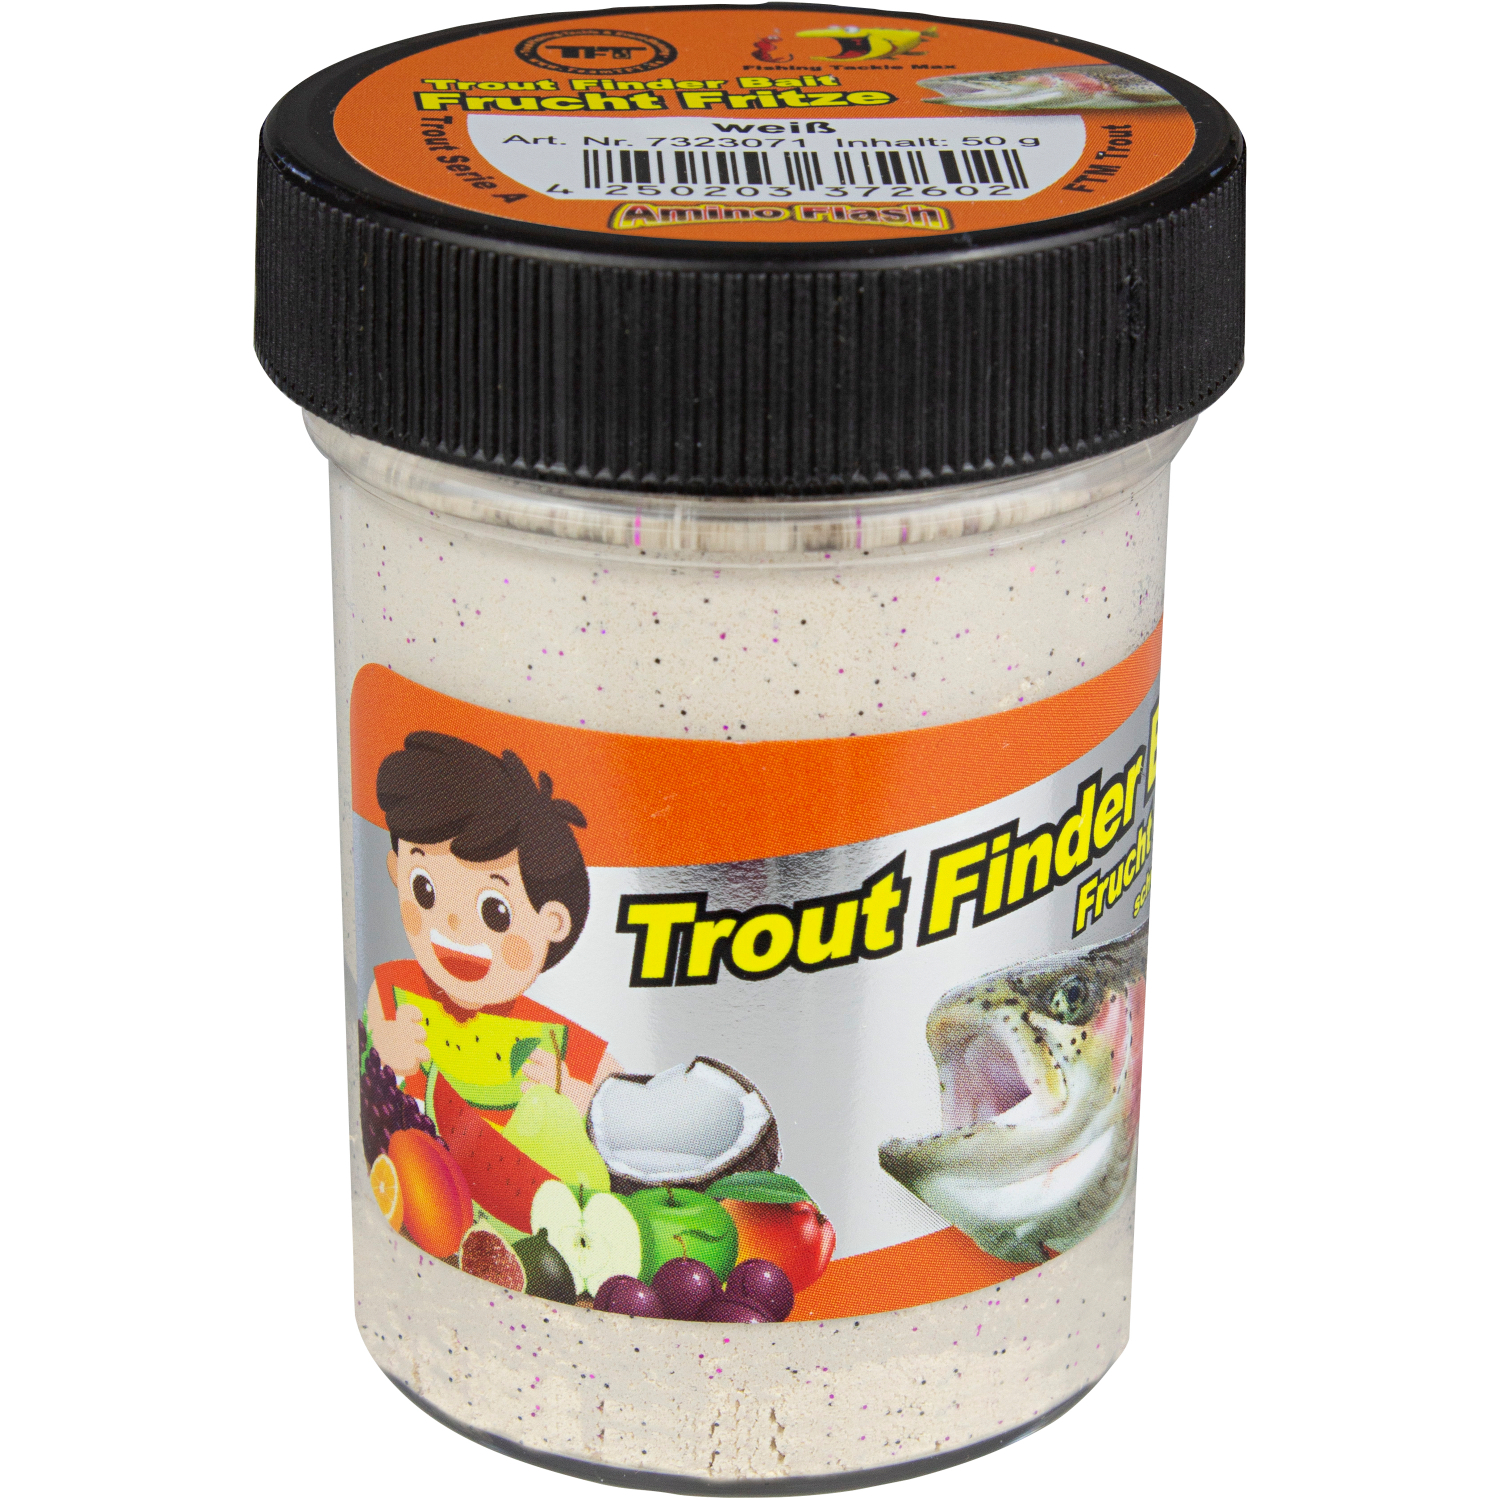 FTM Trout Finder Bait Frucht Fritze (white) 